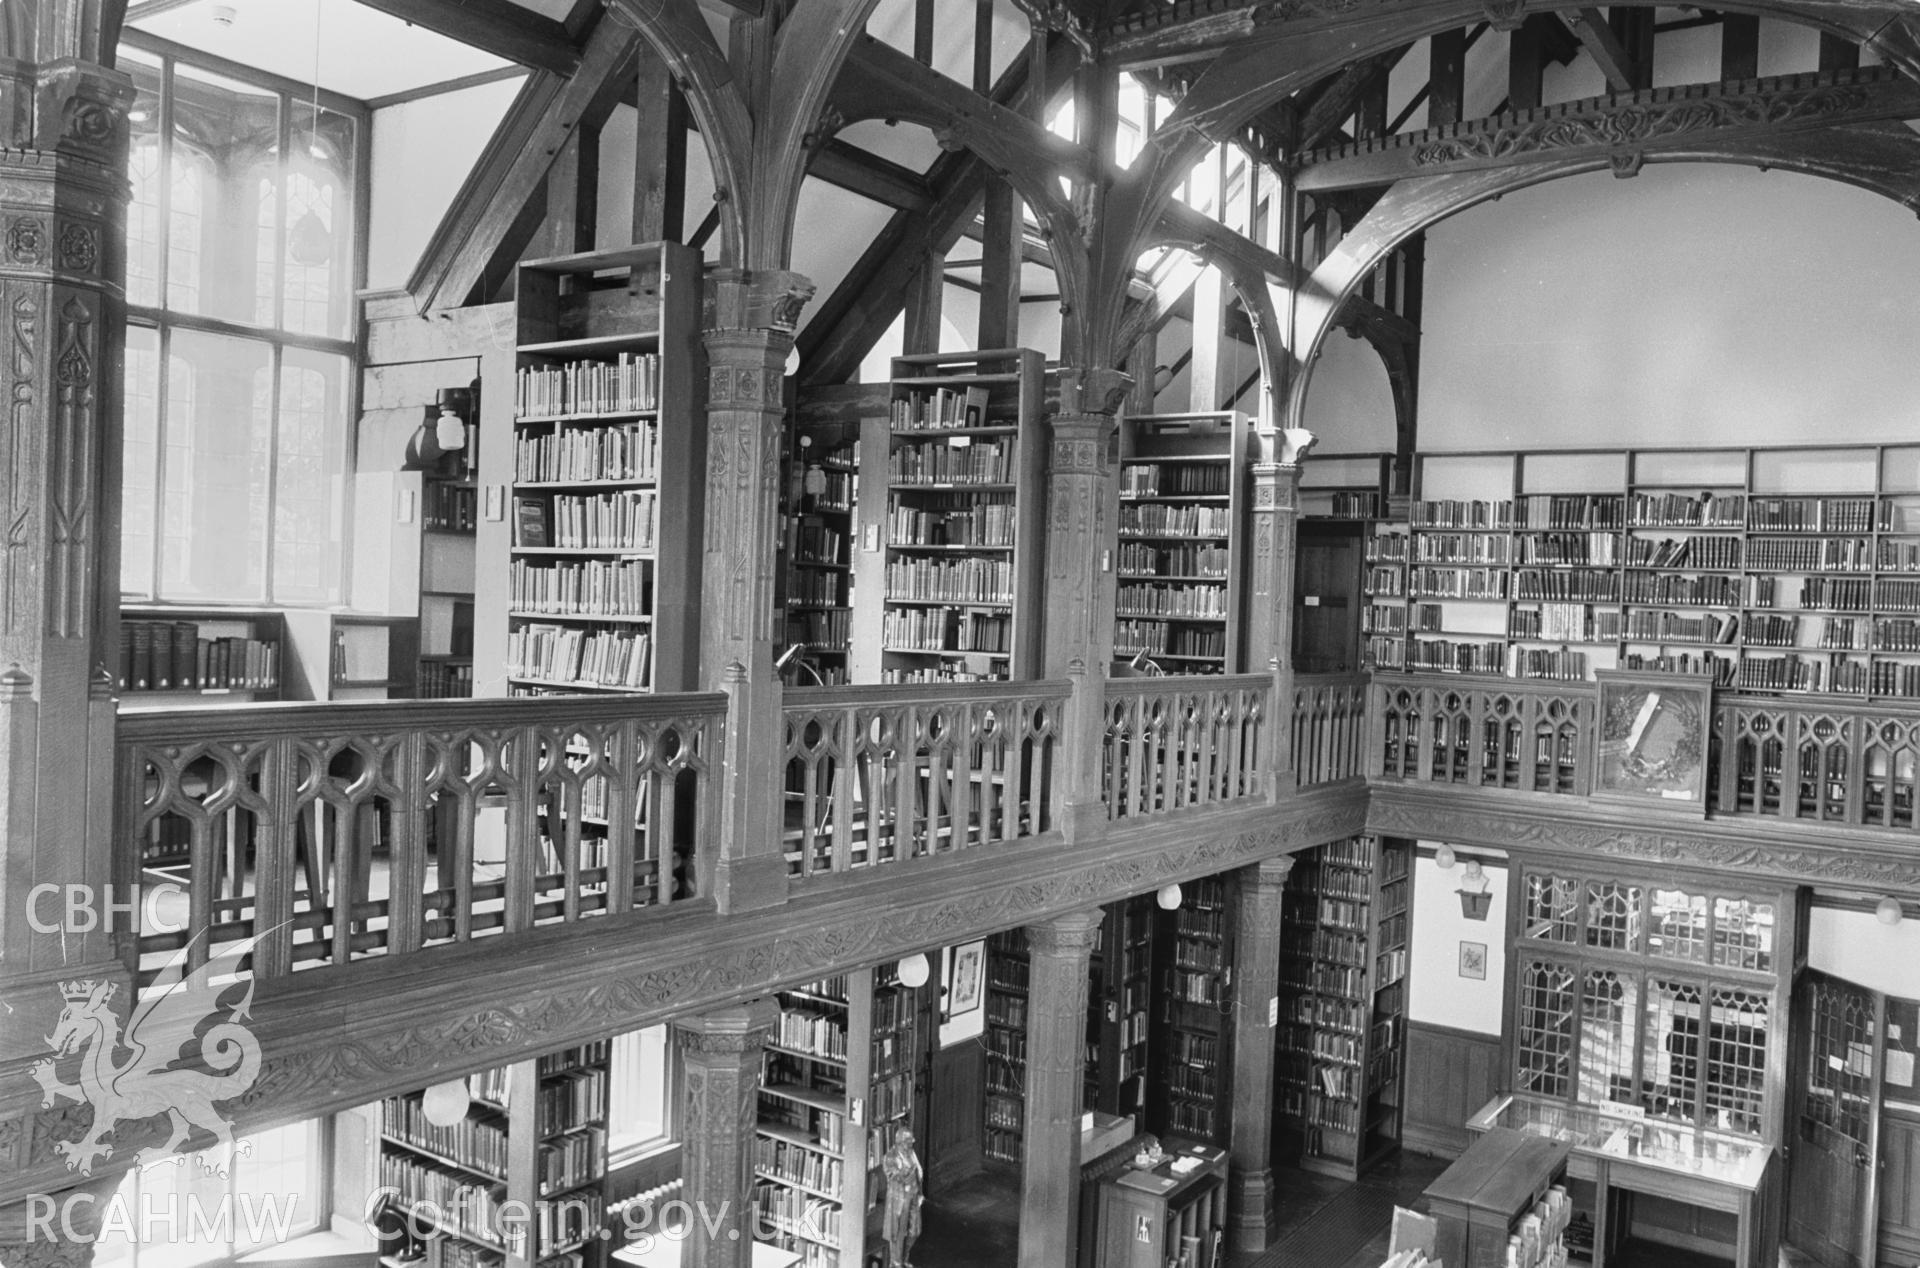 View of interior of St Deiniol's library, Hawarden